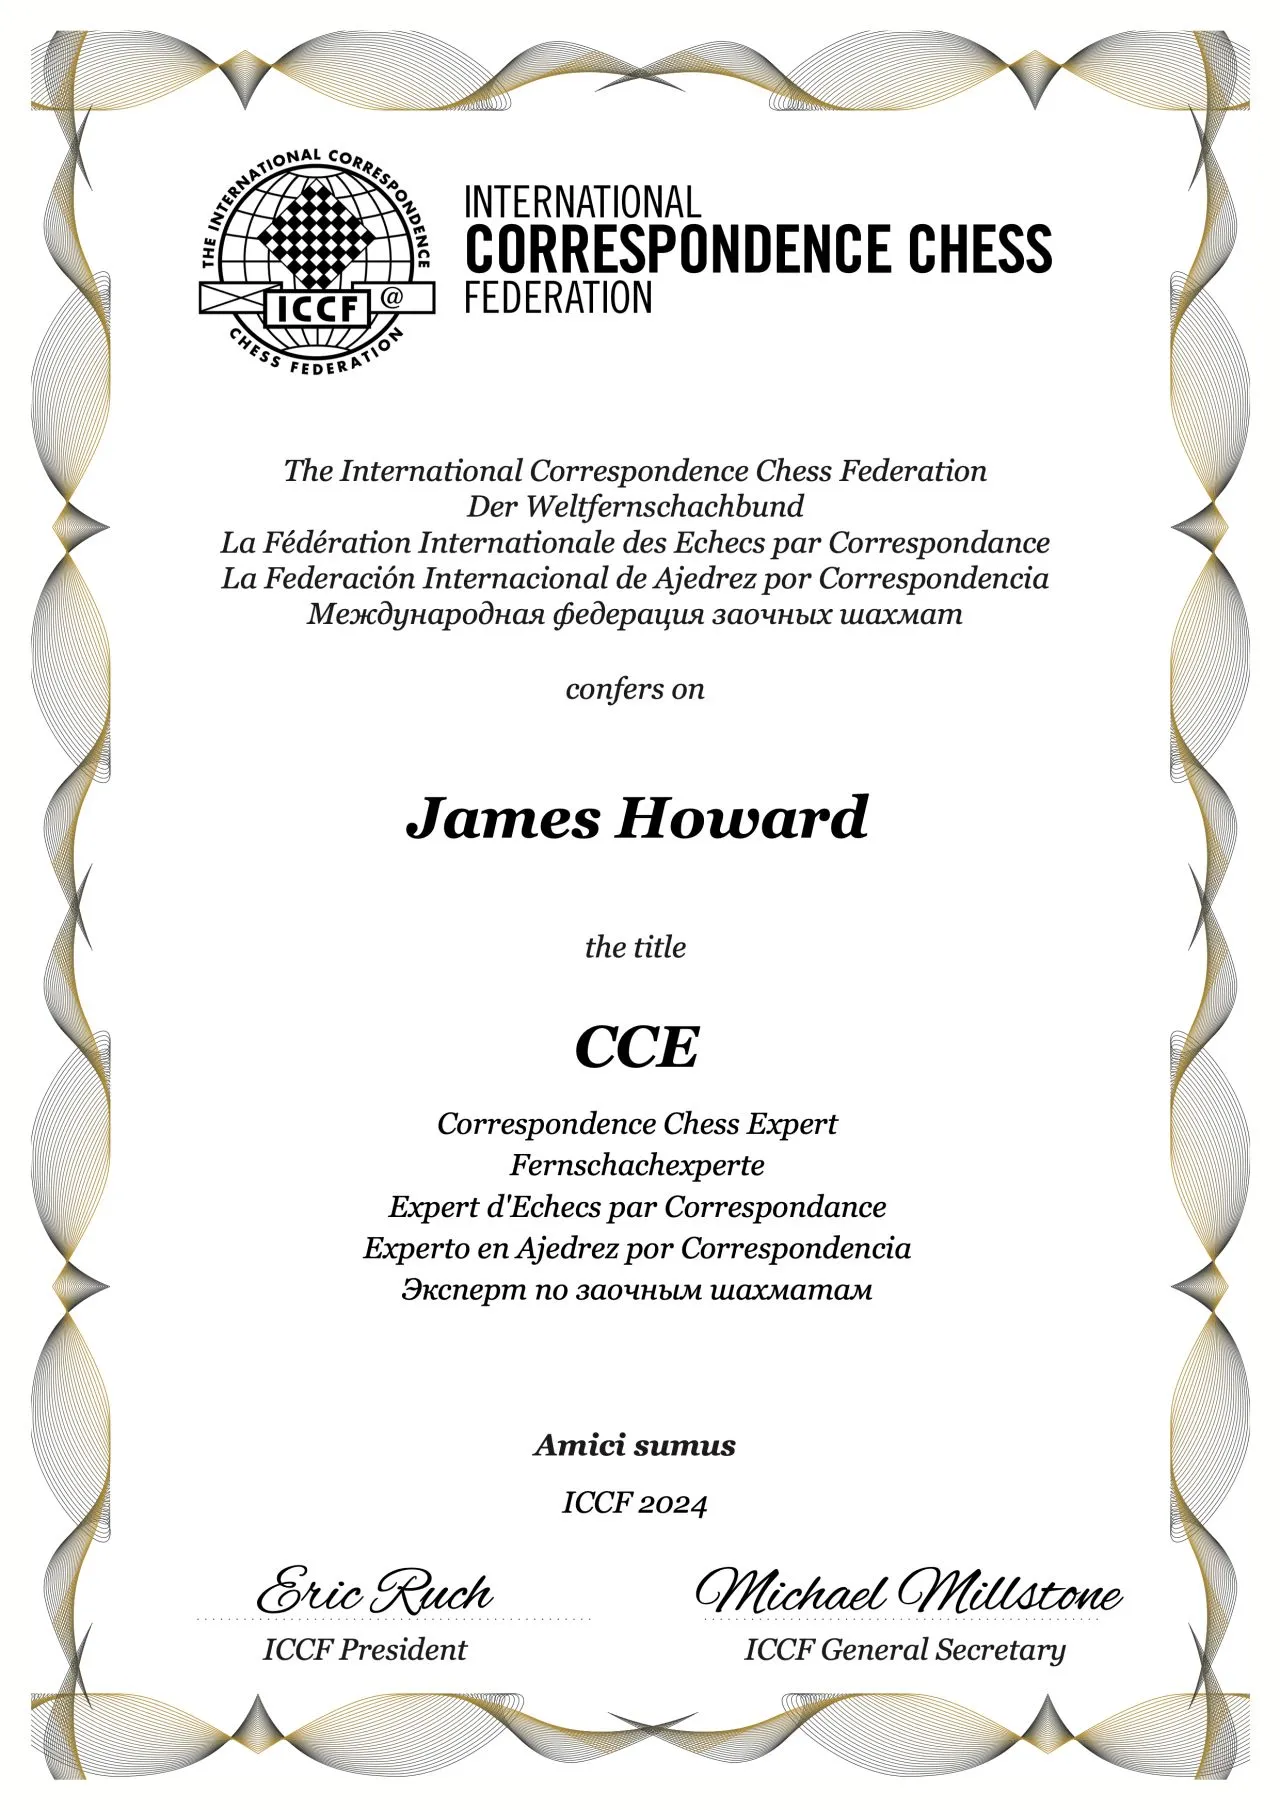 My Correspondence Chess Expert certificate